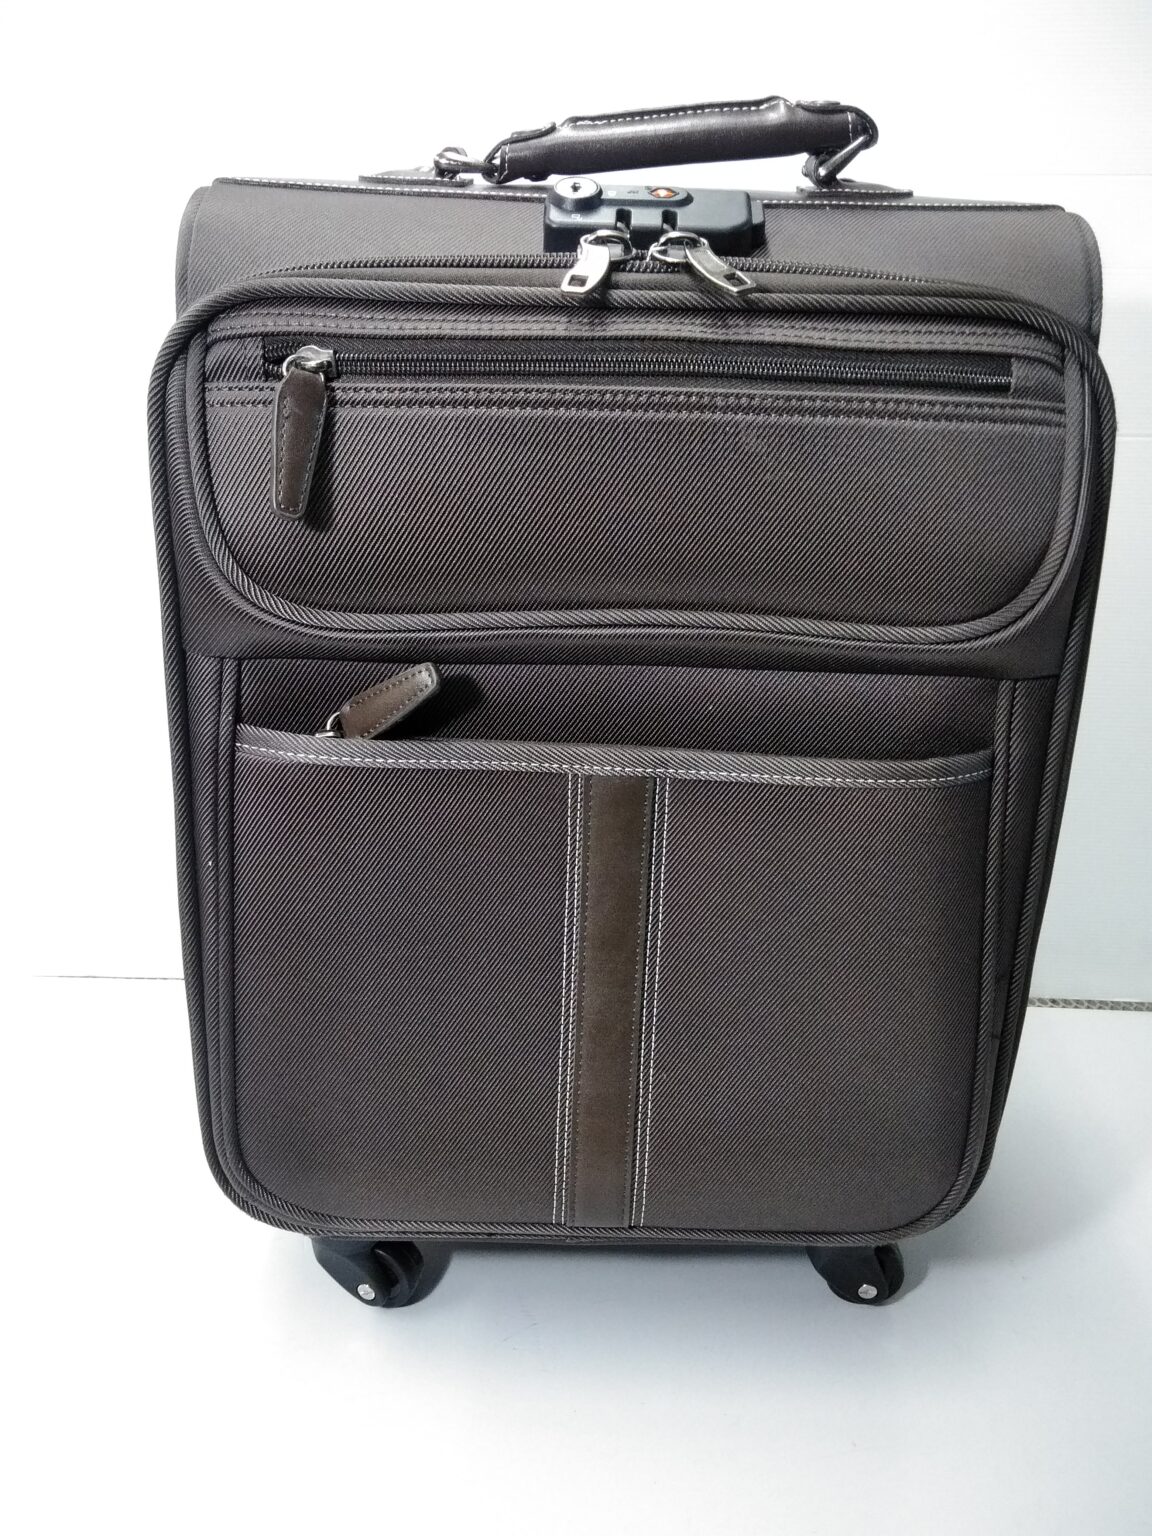 13208-100-10】JAL LIFE&SPICE スーツケース 43ℓ 春バーゲン